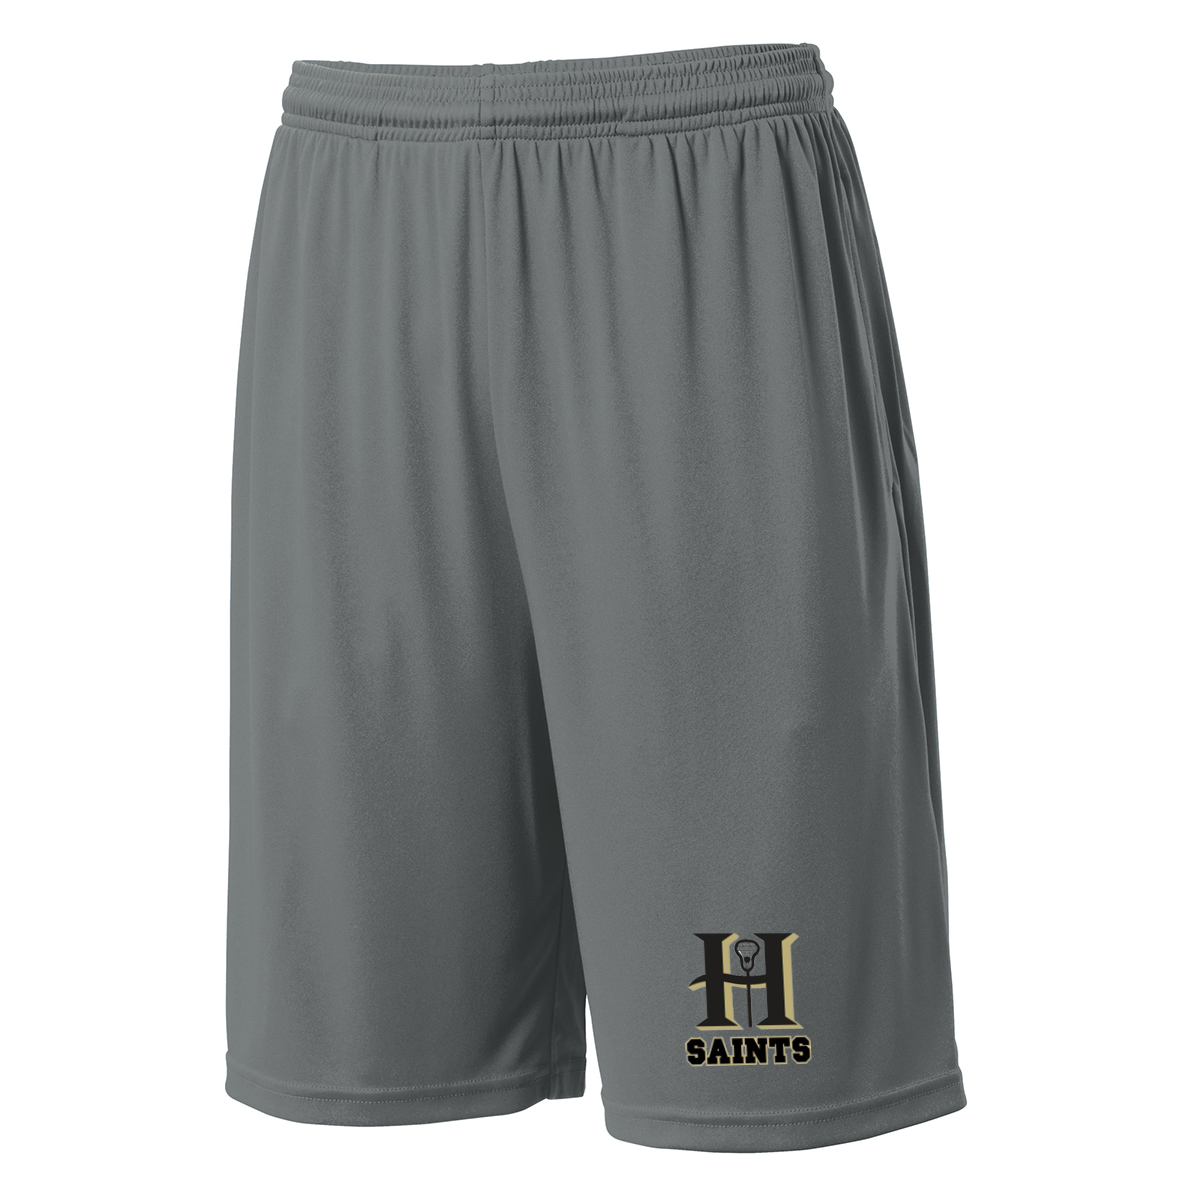 HAYLA Saints Grey Shorts